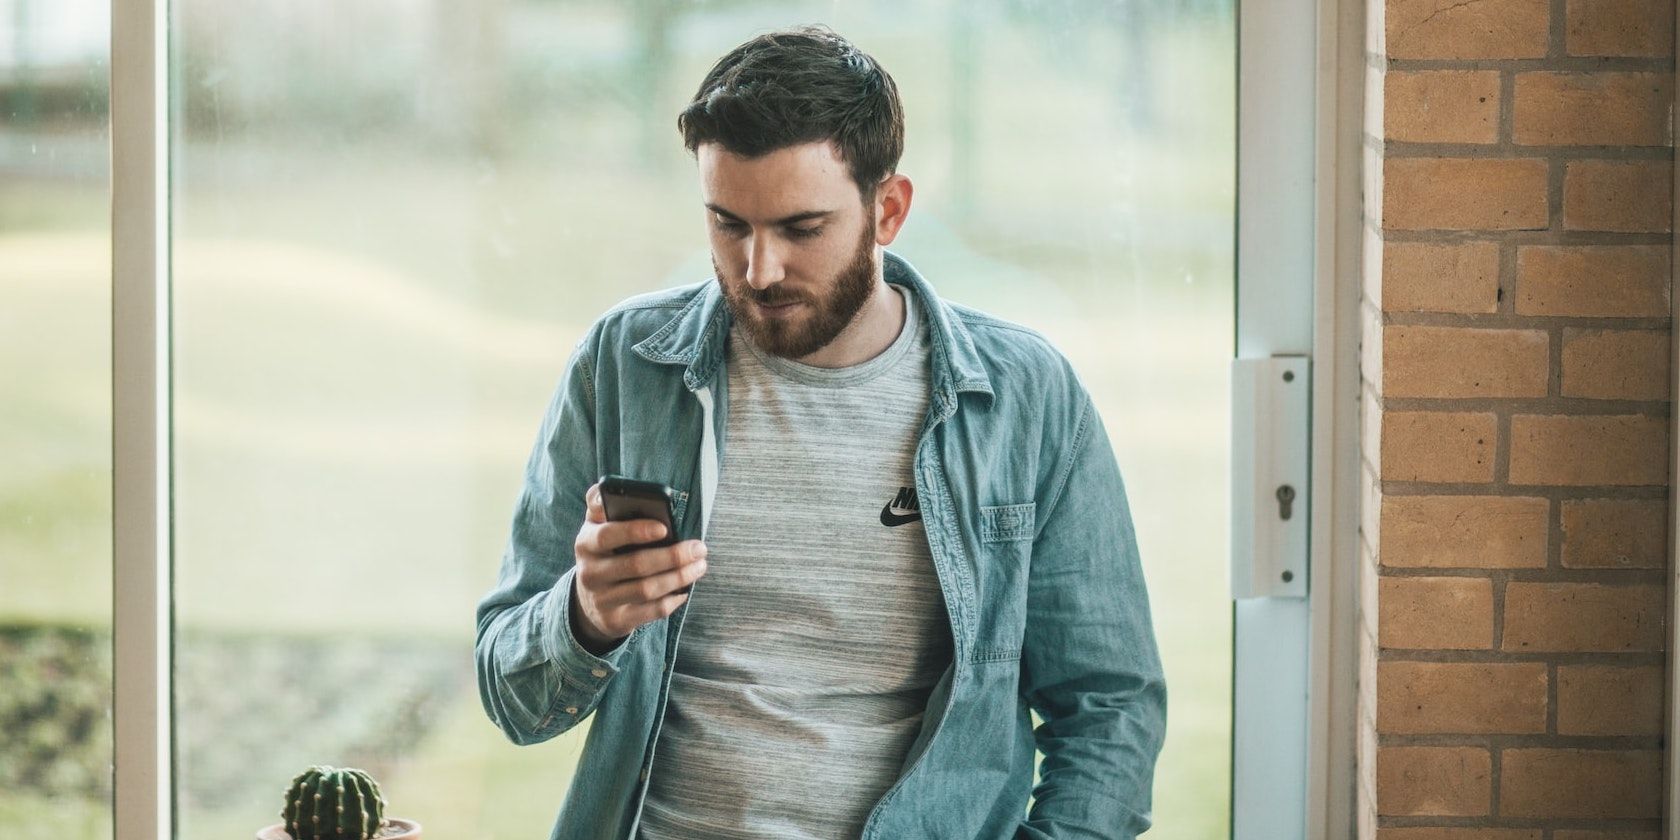 Man Texting on Smartphone